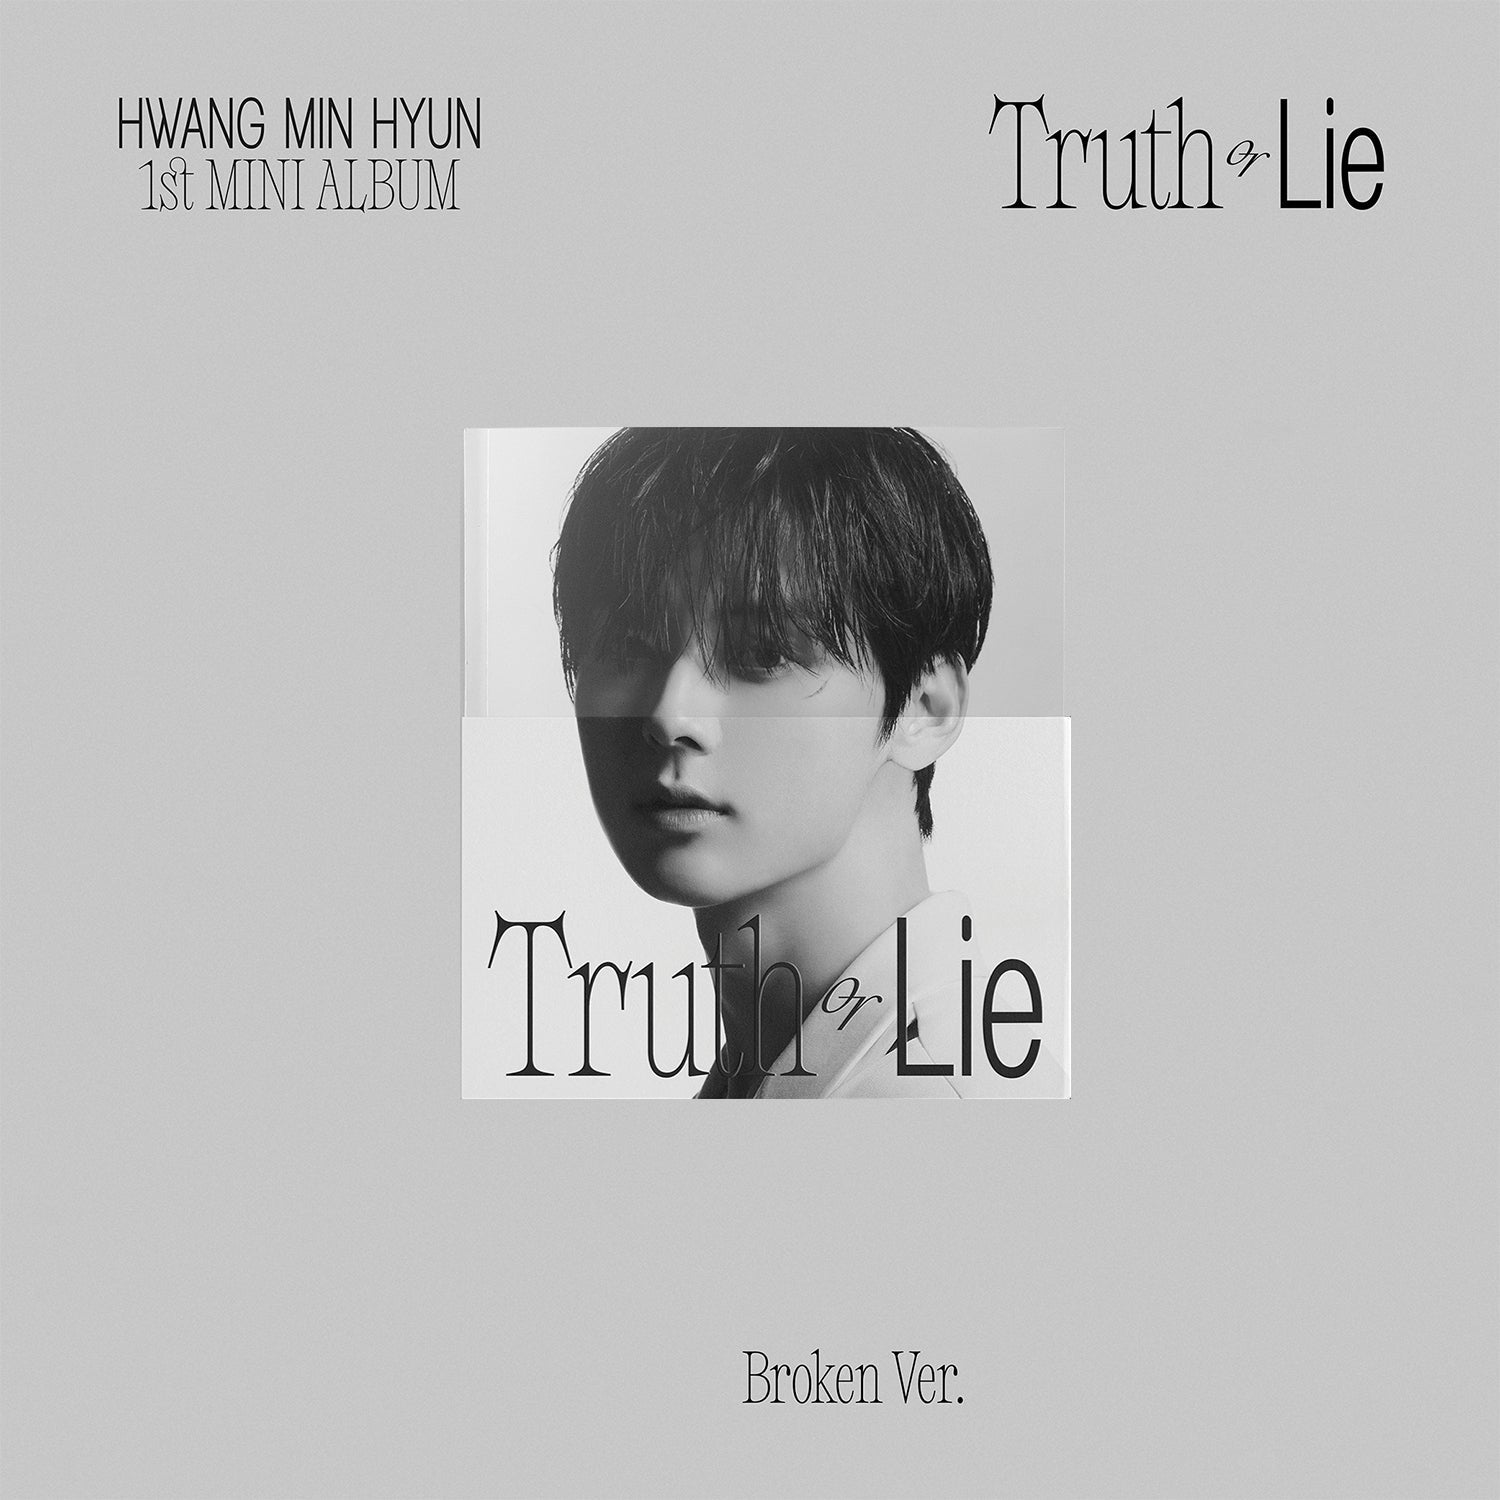 HWANG MIN HYUN 1ST MINI ALBUM 'TRUTH OR LIE' COVER BROKEN VERSION COVER